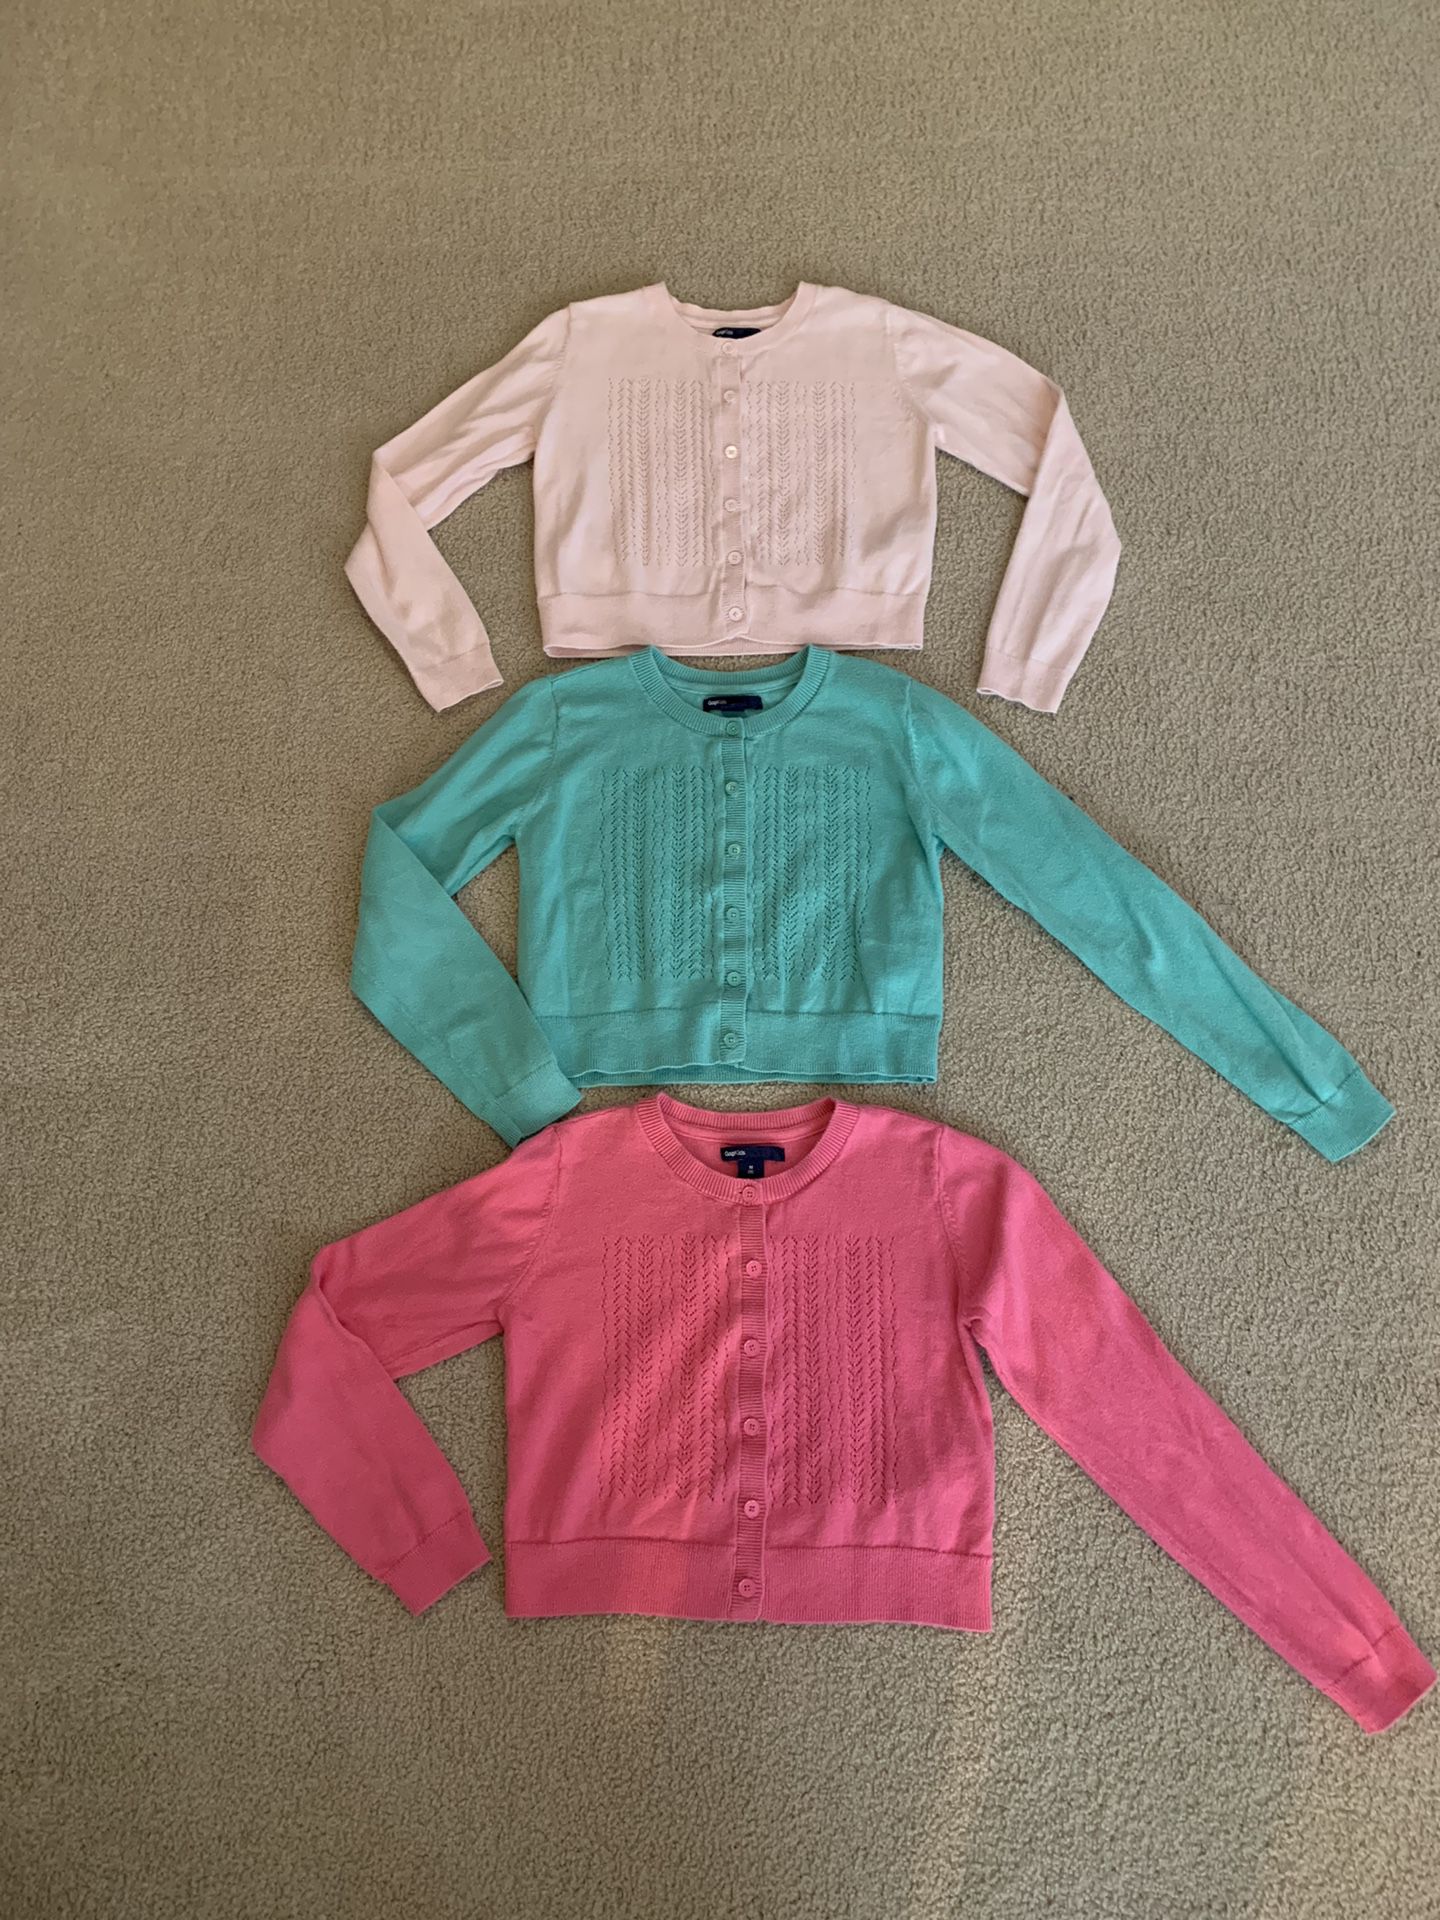 Gap Kids Girls Cardigan Sweaters Size M (8)